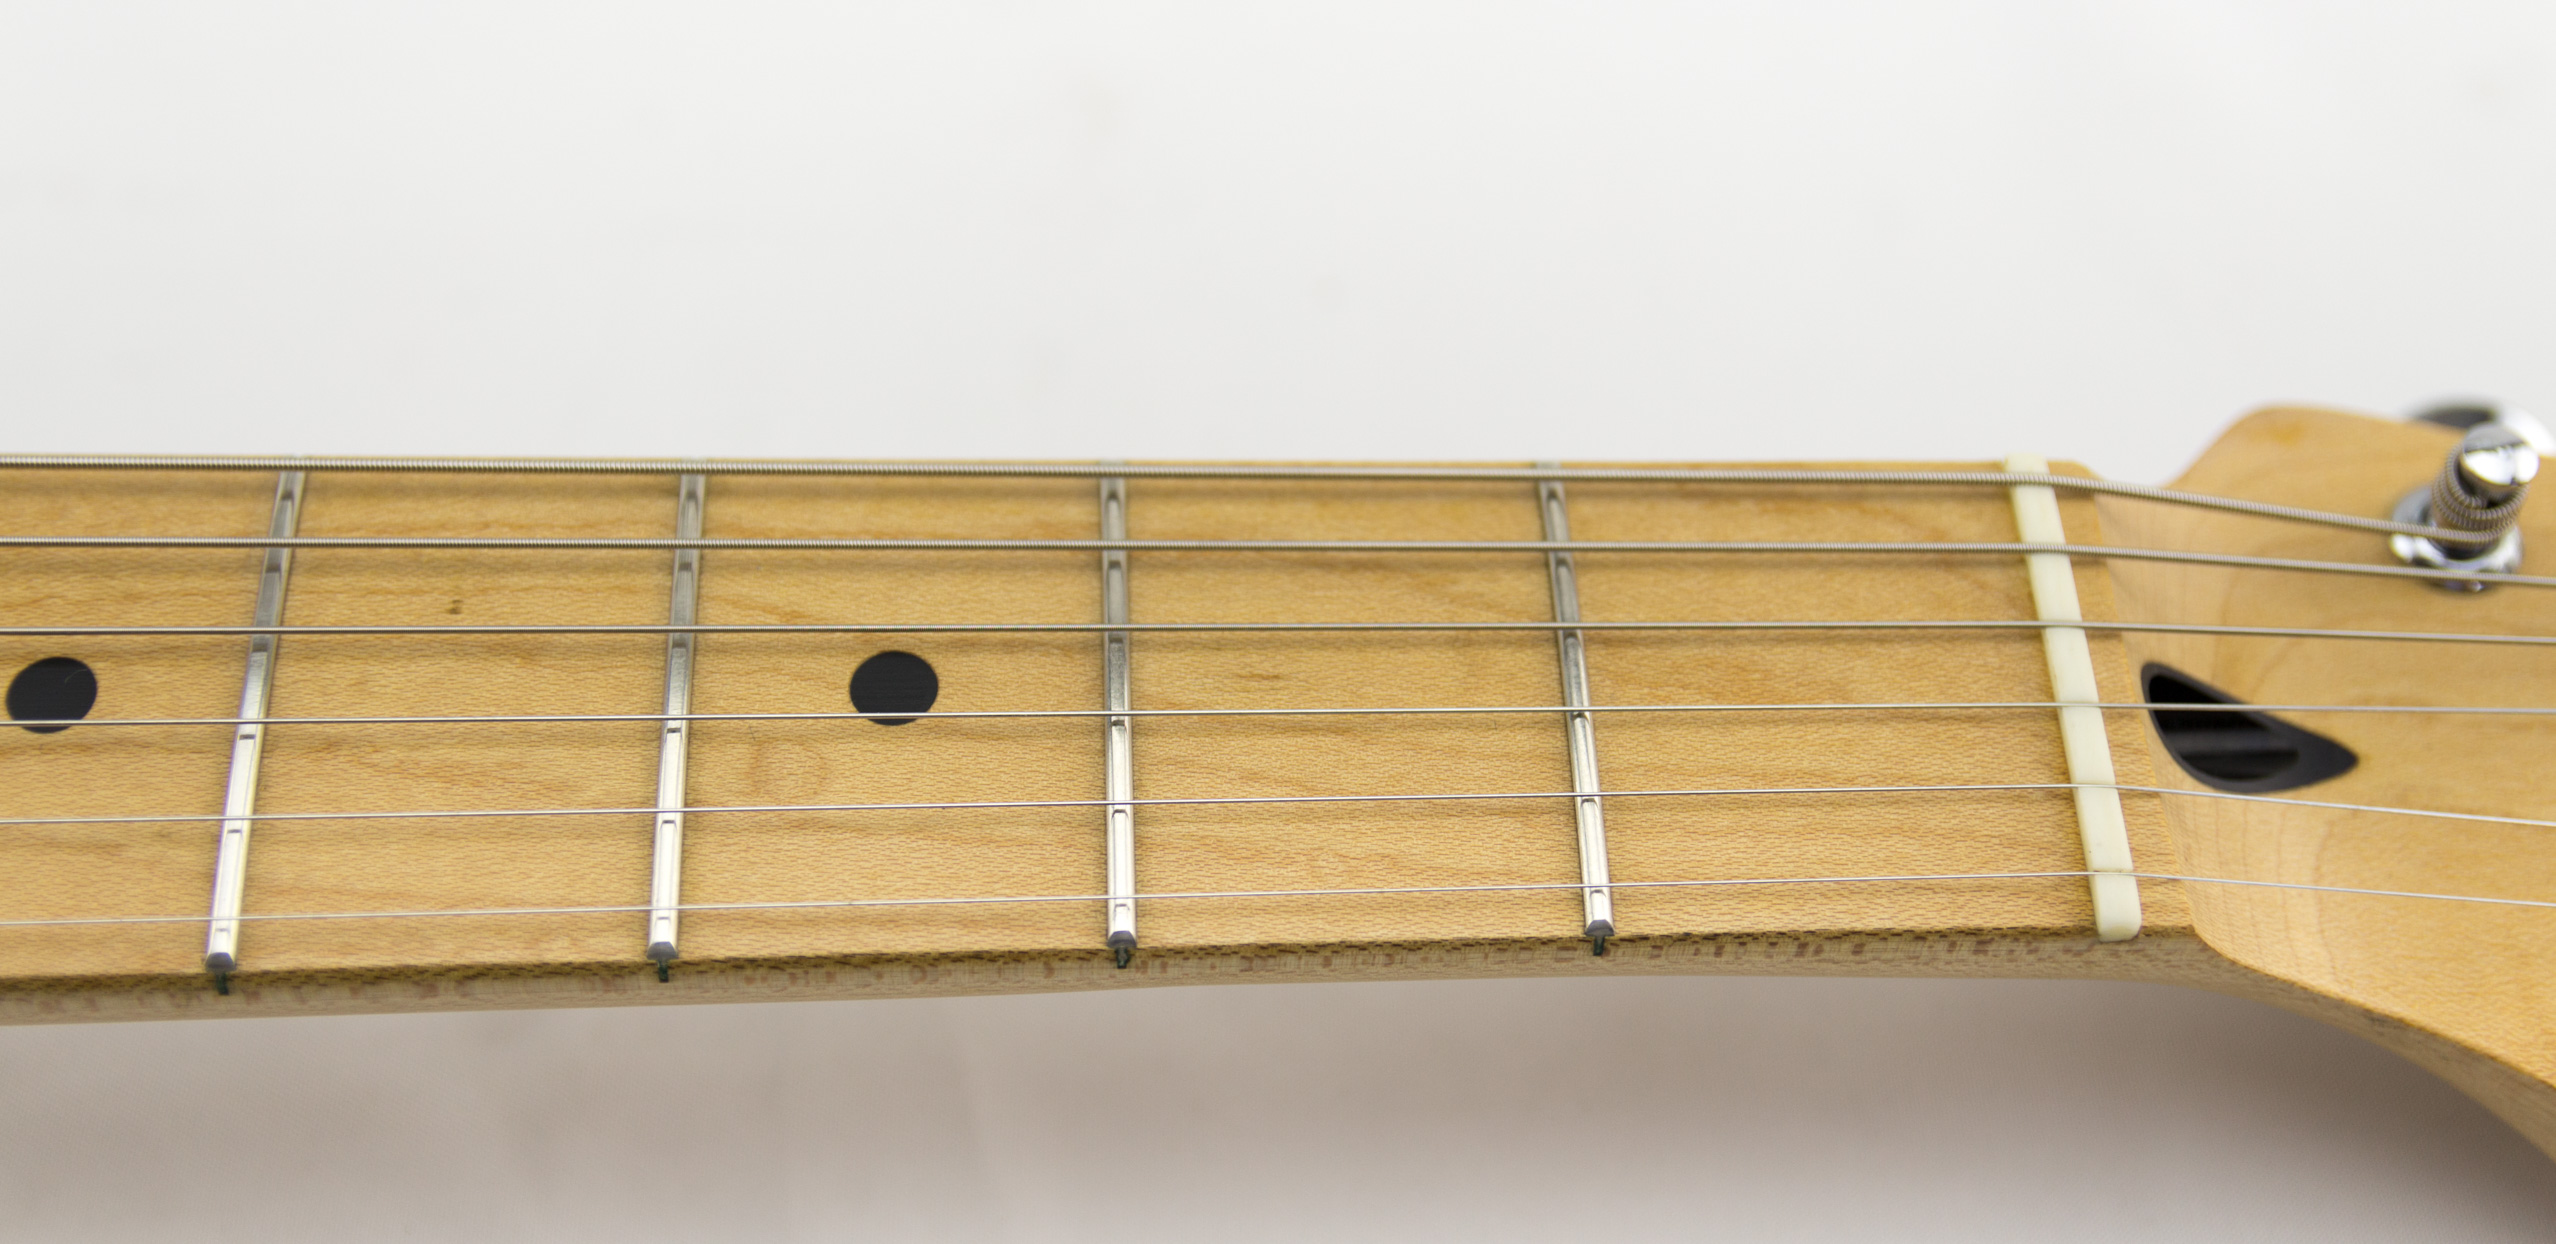 Fender Squier Stratocaster Japan